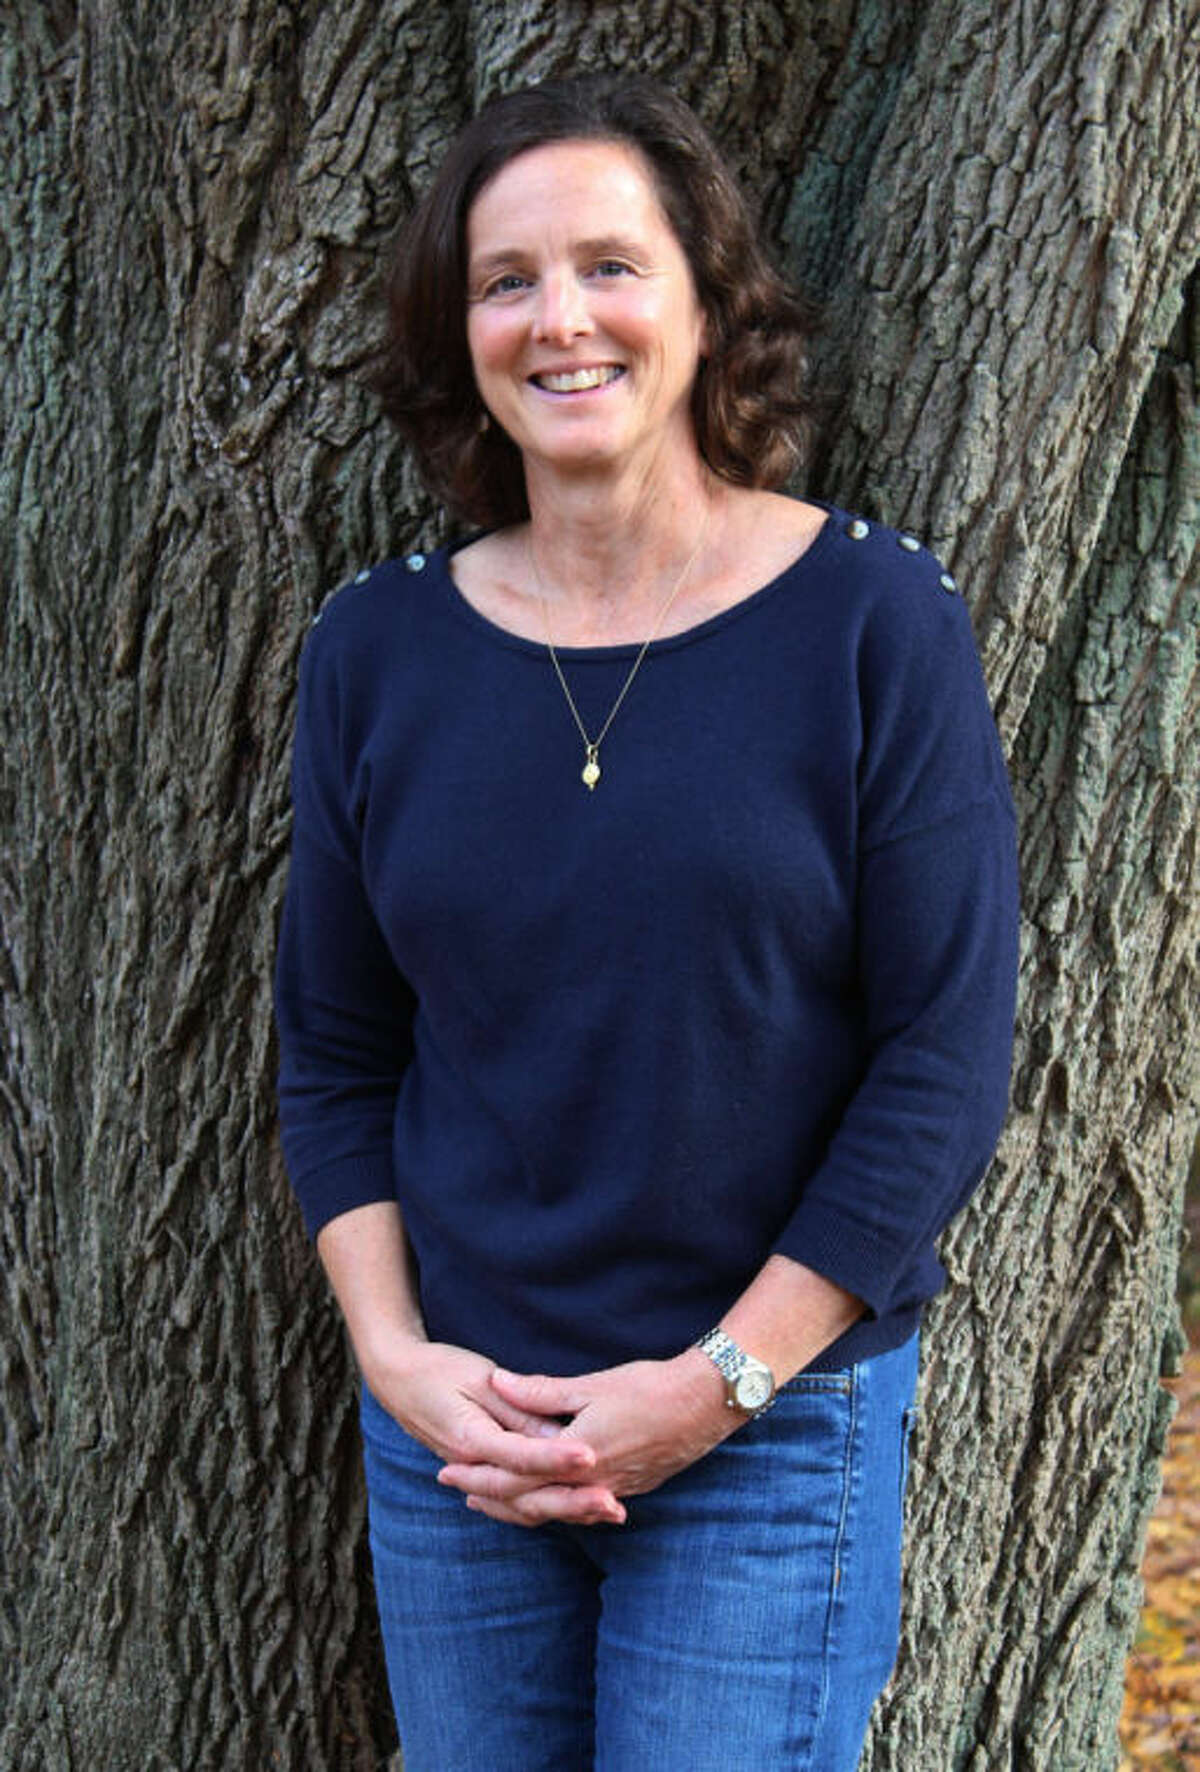 Author Susan Kietzman